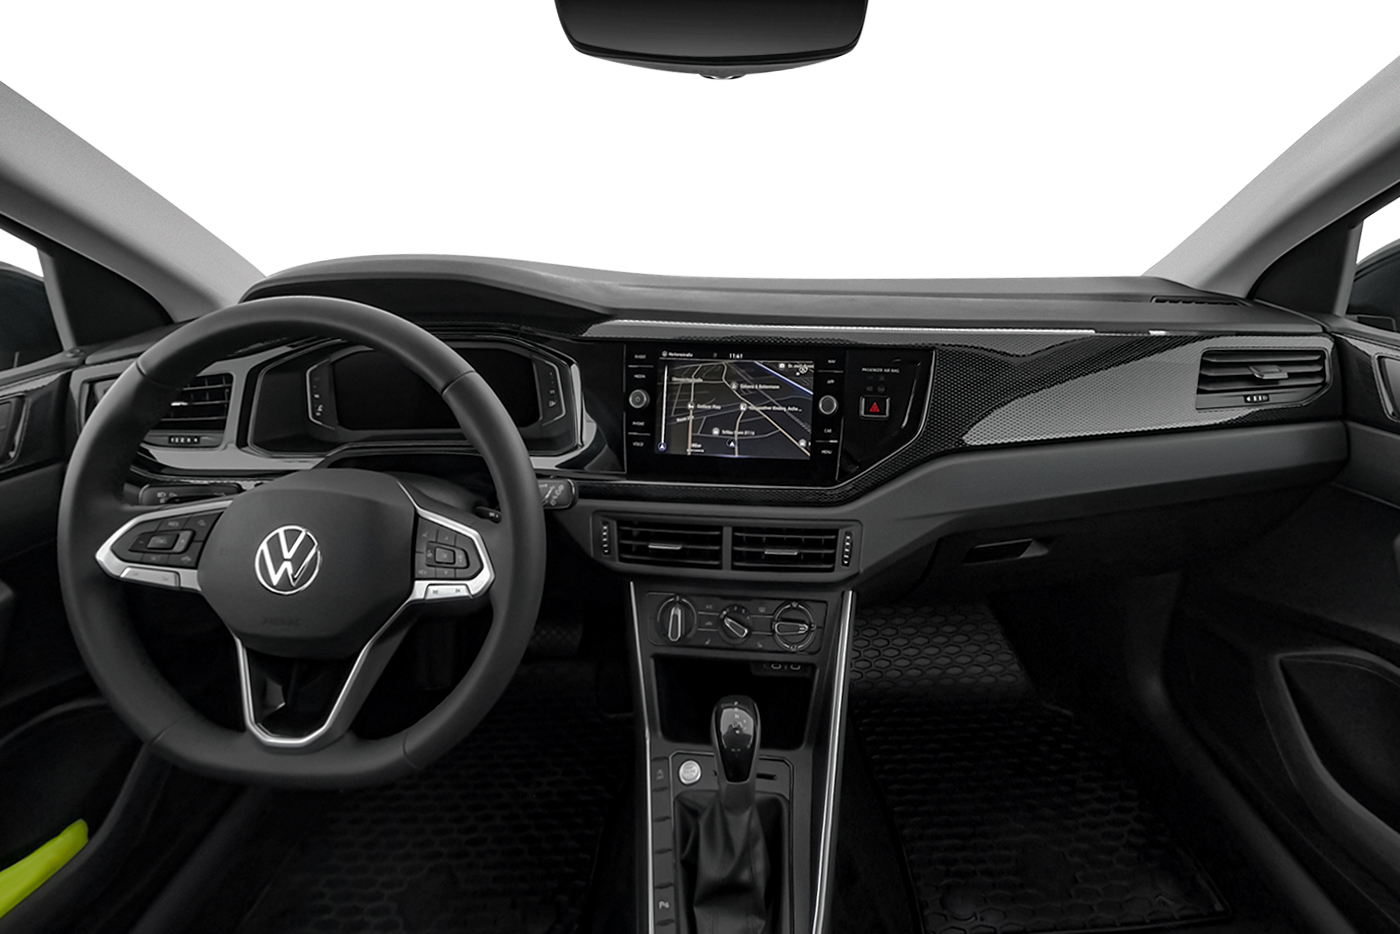 https://abo.miles-mobility.com/media/250/download/VW_Polo_in-car_front.jpg?v=1